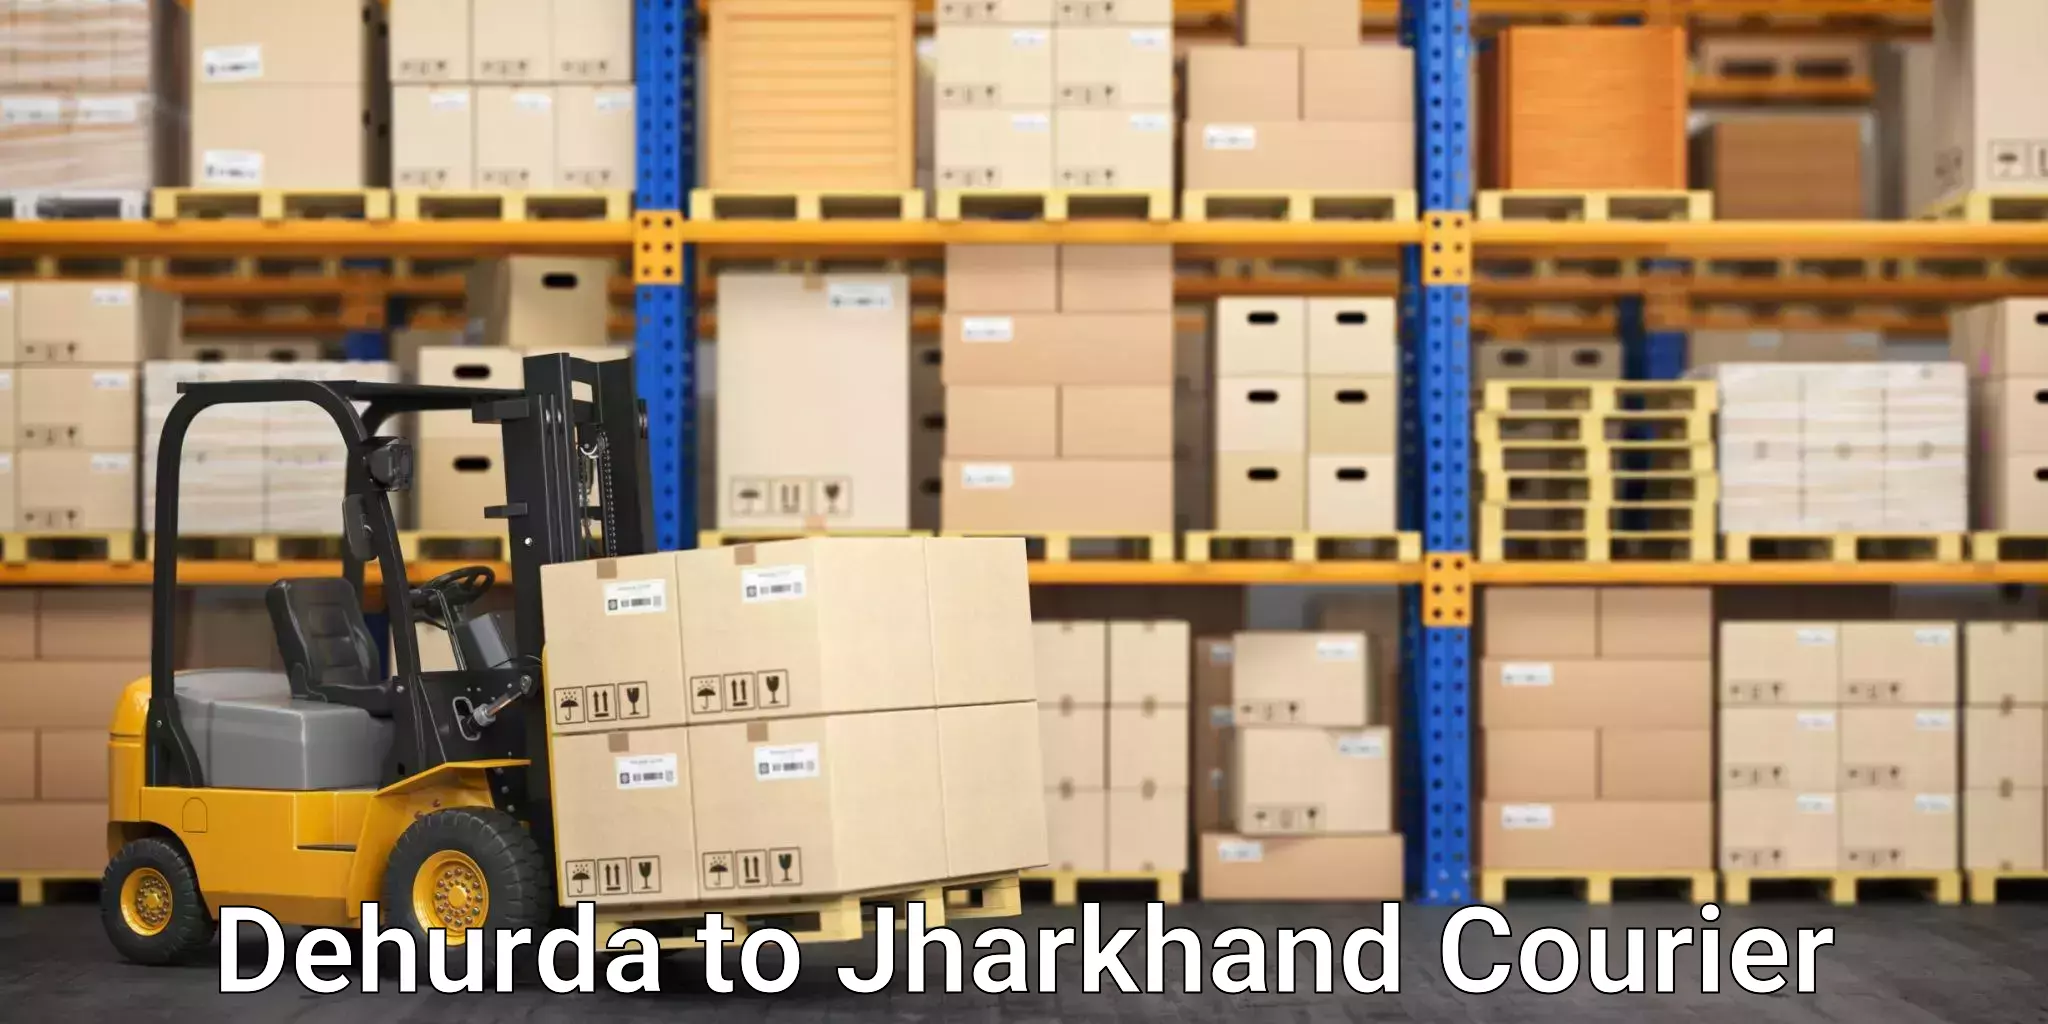 Easy return solutions Dehurda to Jharkhand